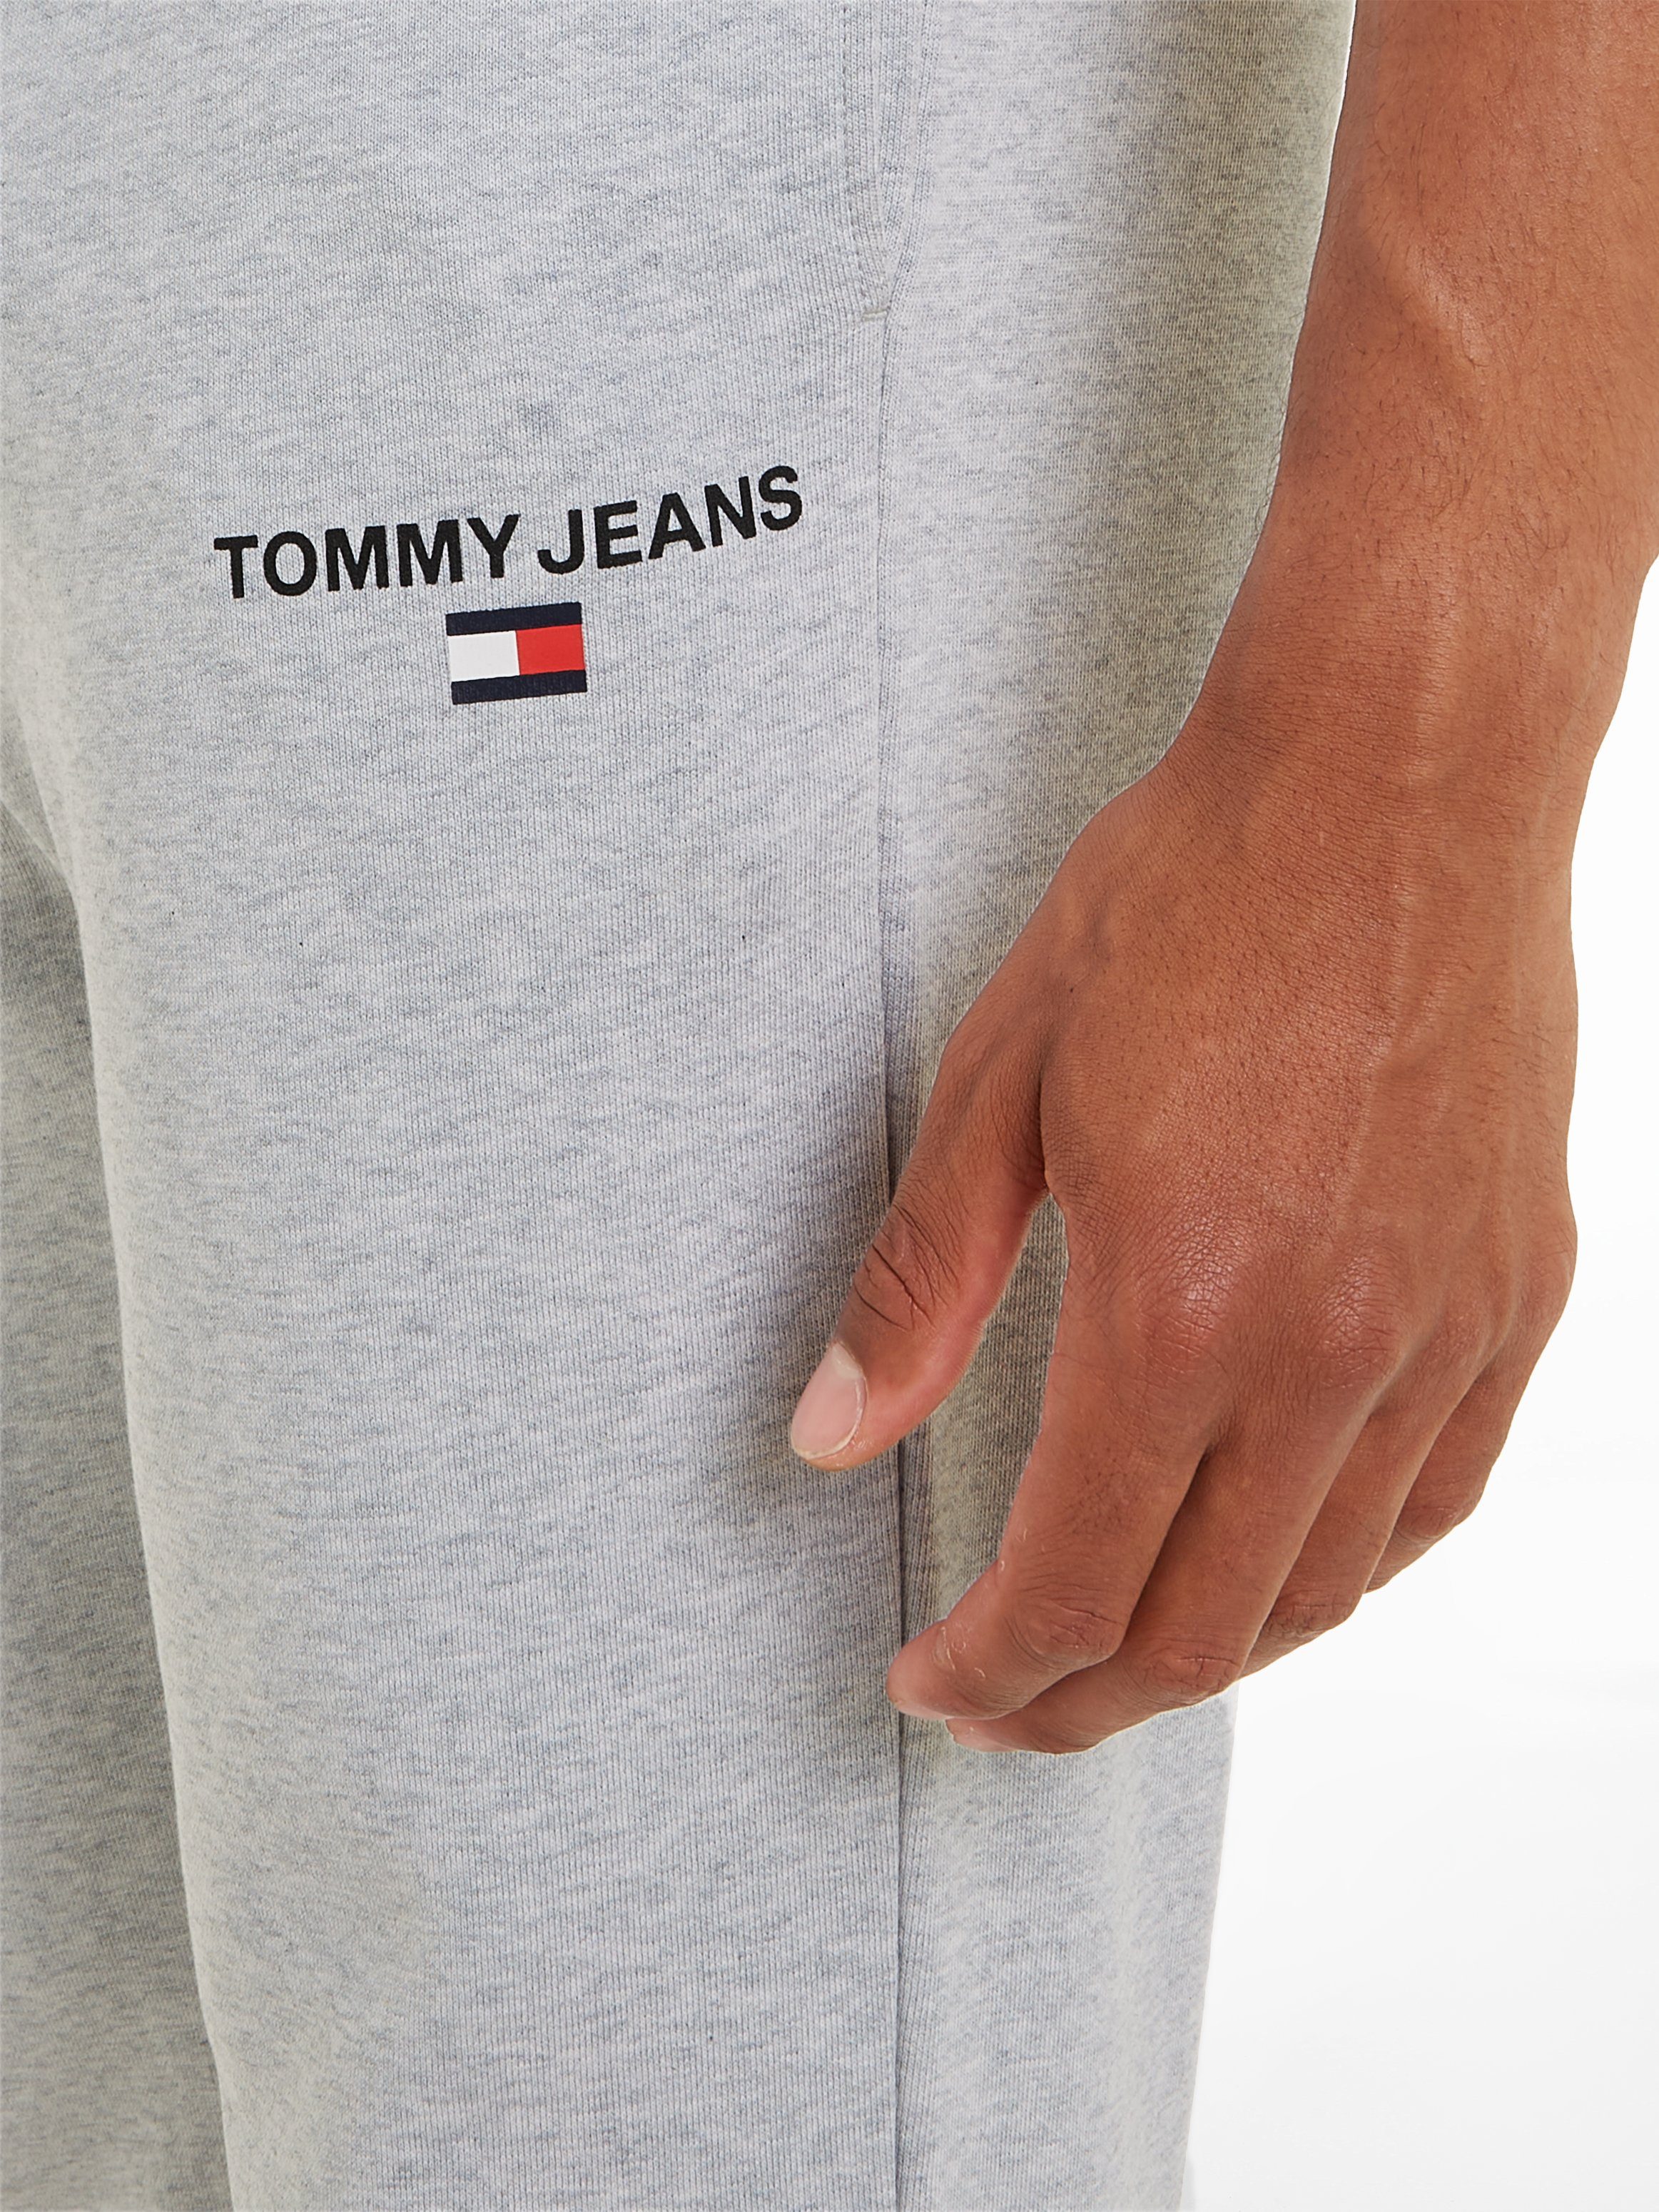 REG ENTRY Jeans Tommy JOGGER Grey Htr GRAPHIC TJM Sweathose Silver